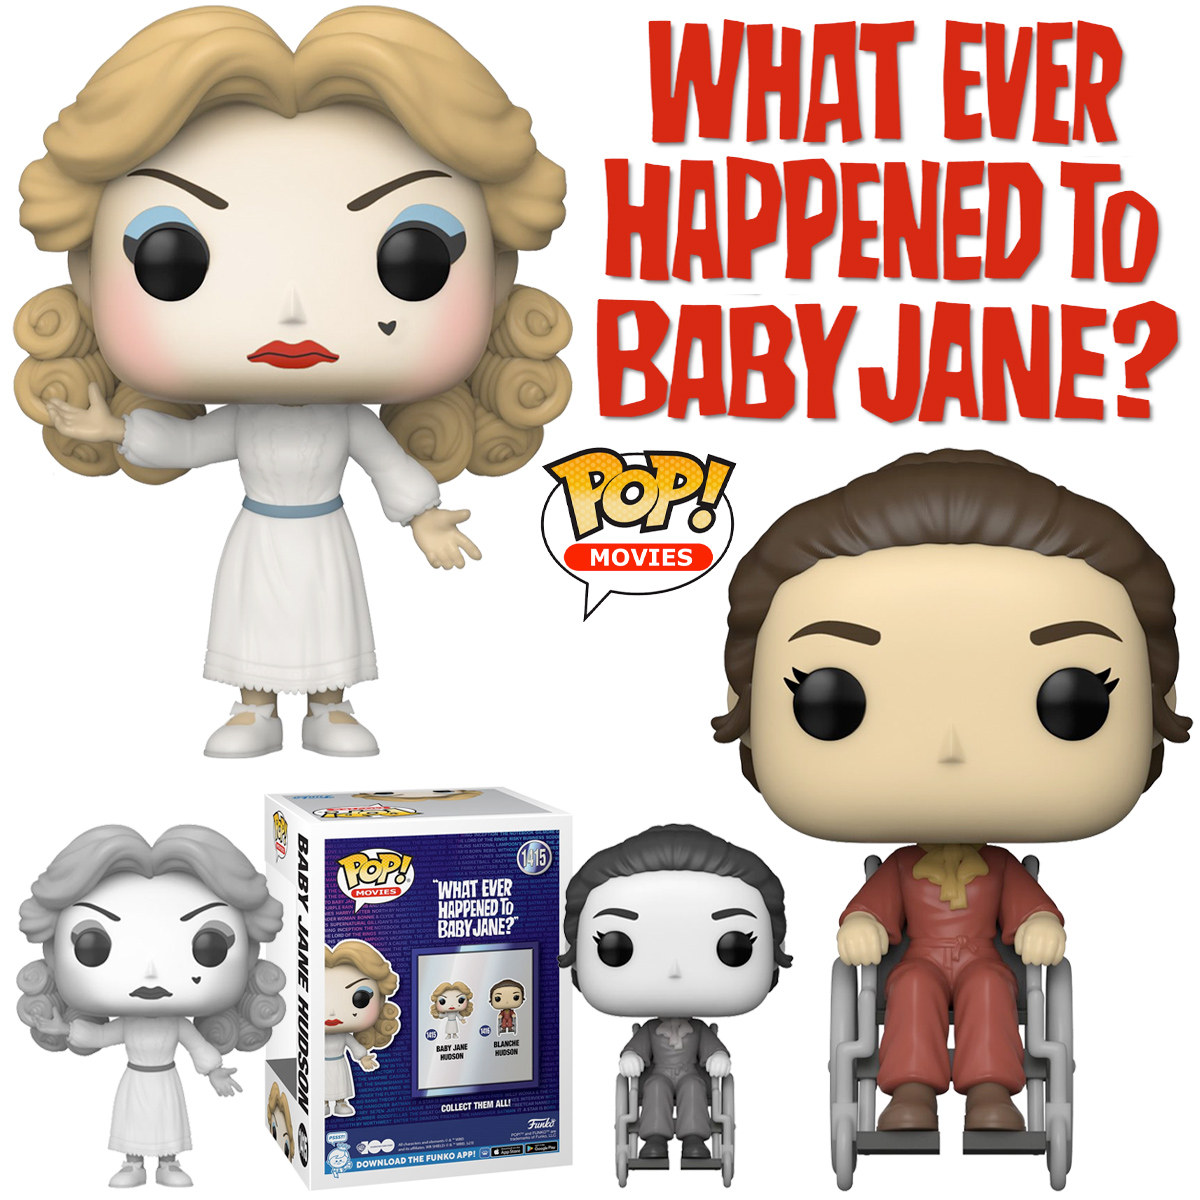 Bonecas Pop! What Ever Happened to Baby Jane?